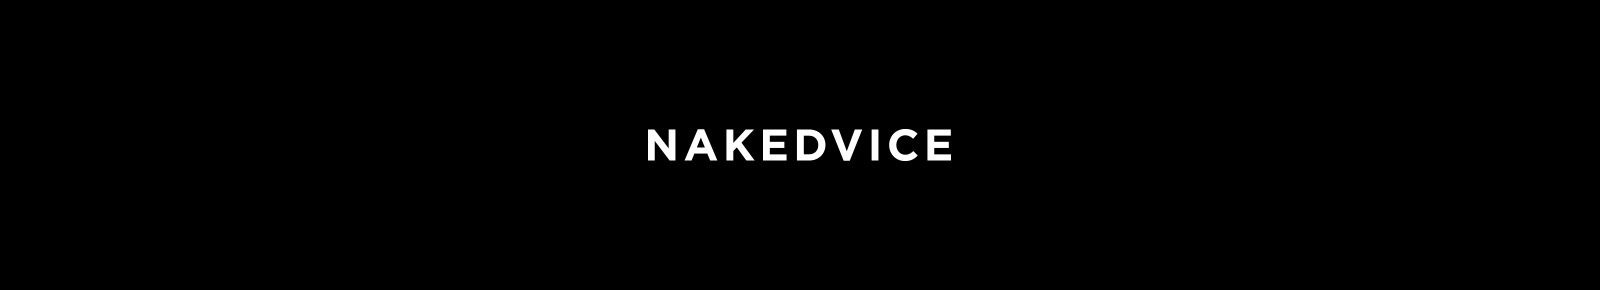 Nakedvice